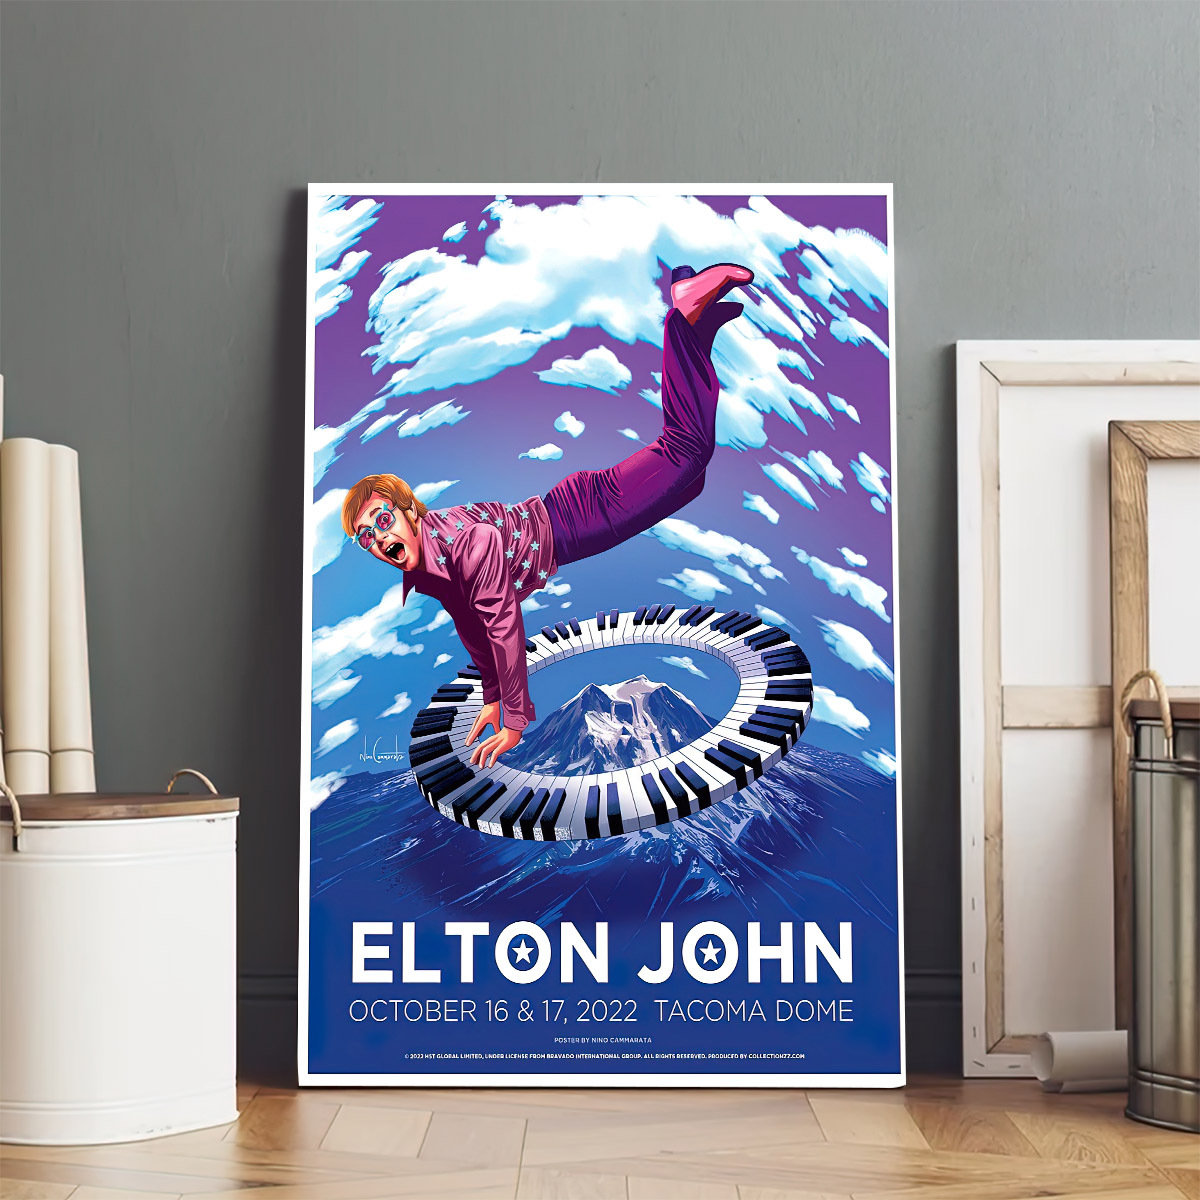 Elton John Tour 2022 Tacoma Dome October 16th 17th Poster Canvas